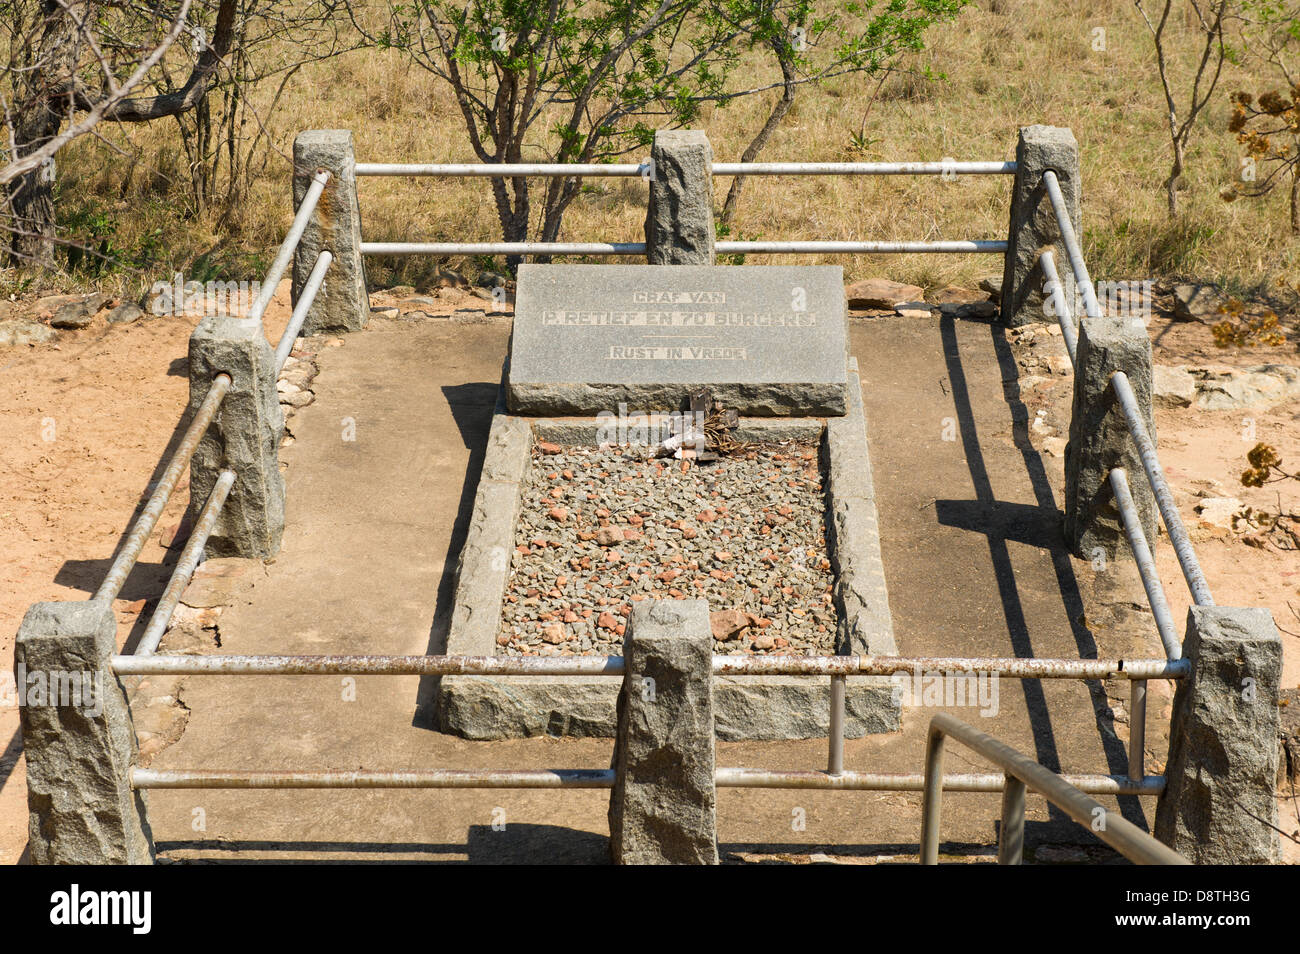 Tomba di Piet Retief e i suoi seguaci che erano stati uccisi da King Zulu Dingane nel 1838, Ulundi, Sud Africa Foto Stock